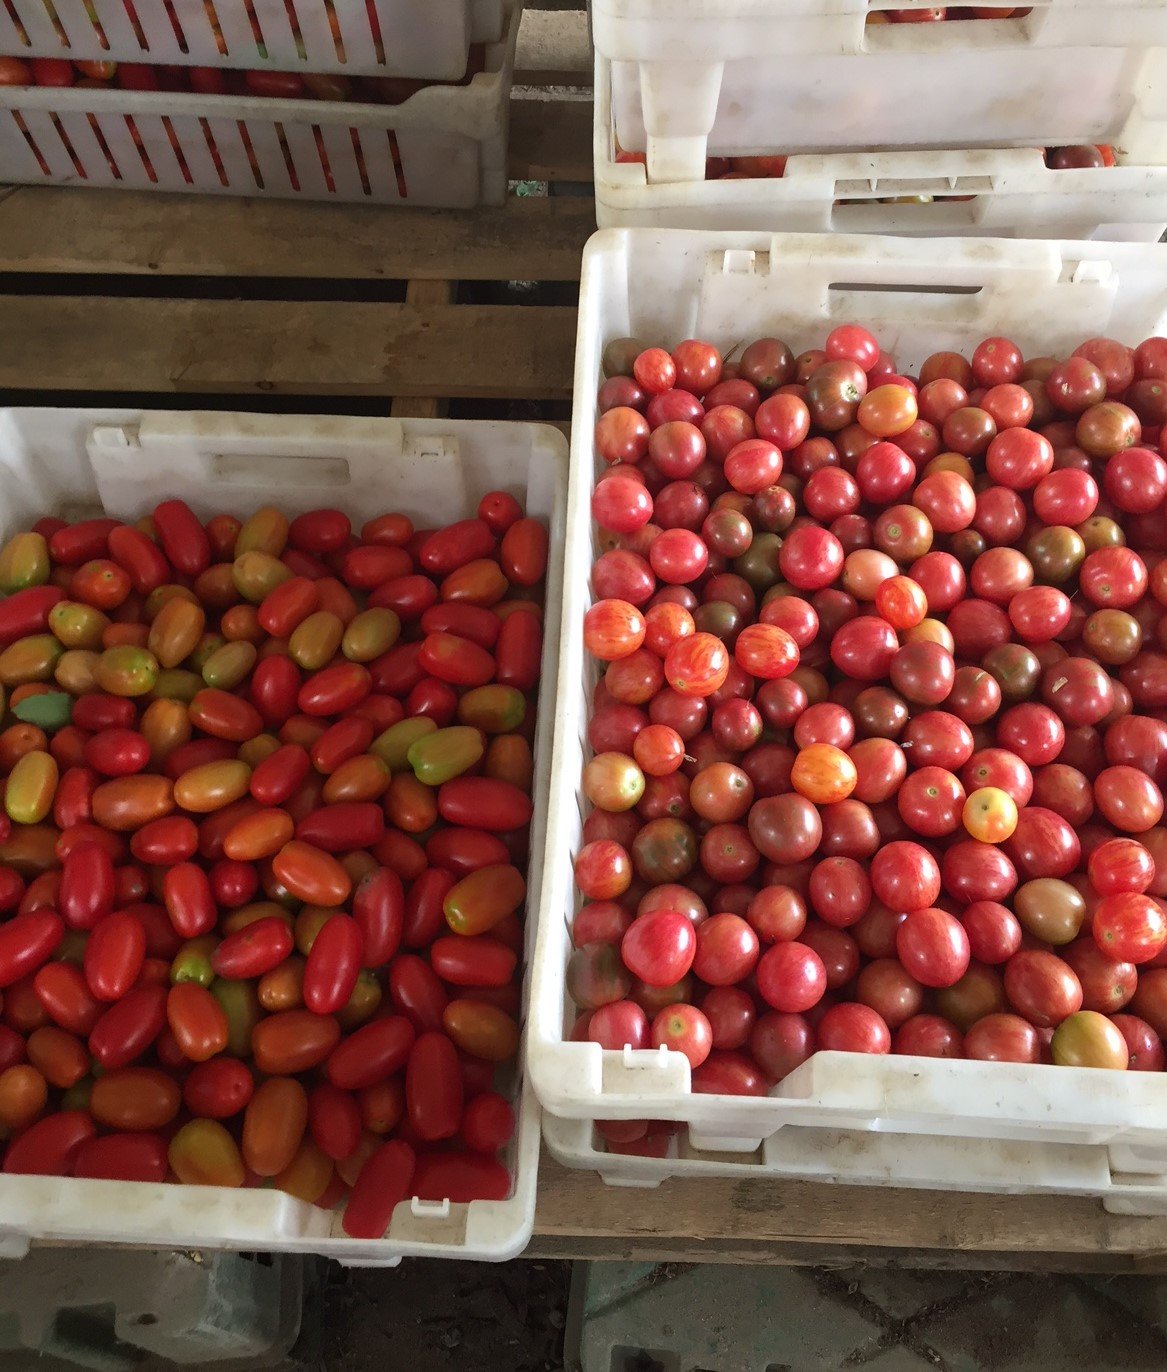 Next Happening: Week 11 Aug 21-26 Cooper's CSA Farm Happenings -Let The field tomatoes begin!!